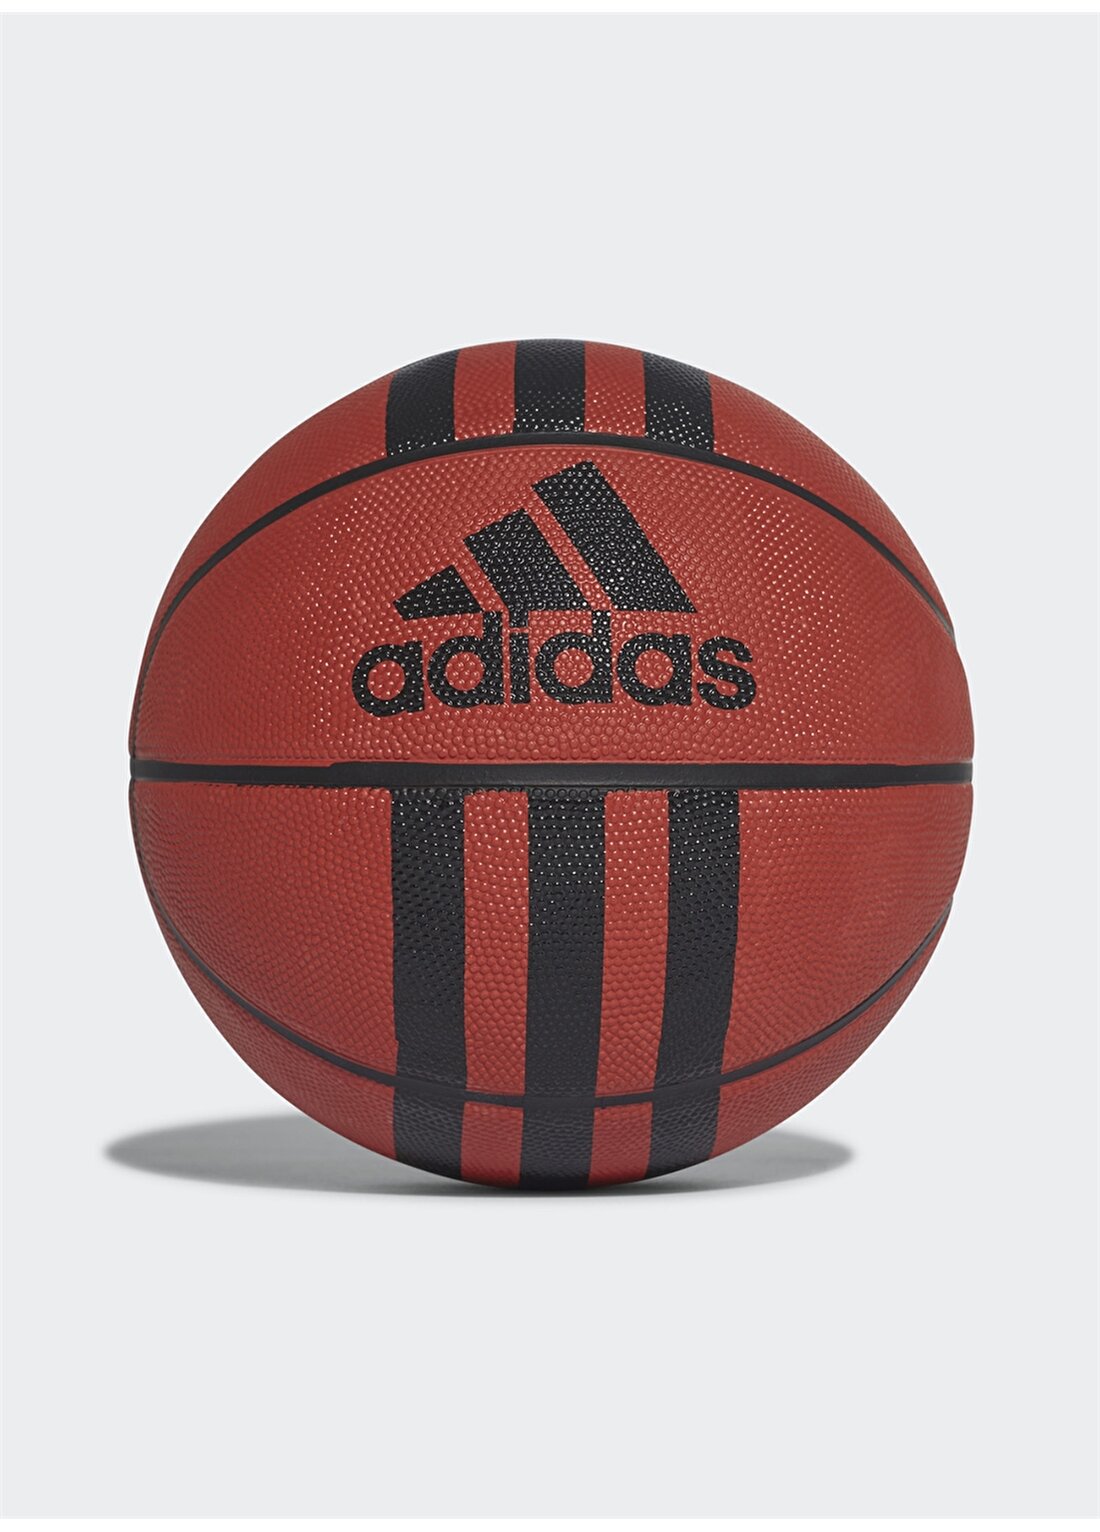 Adidas 218977 3 STRIPE D Erkek Basketbol Topu